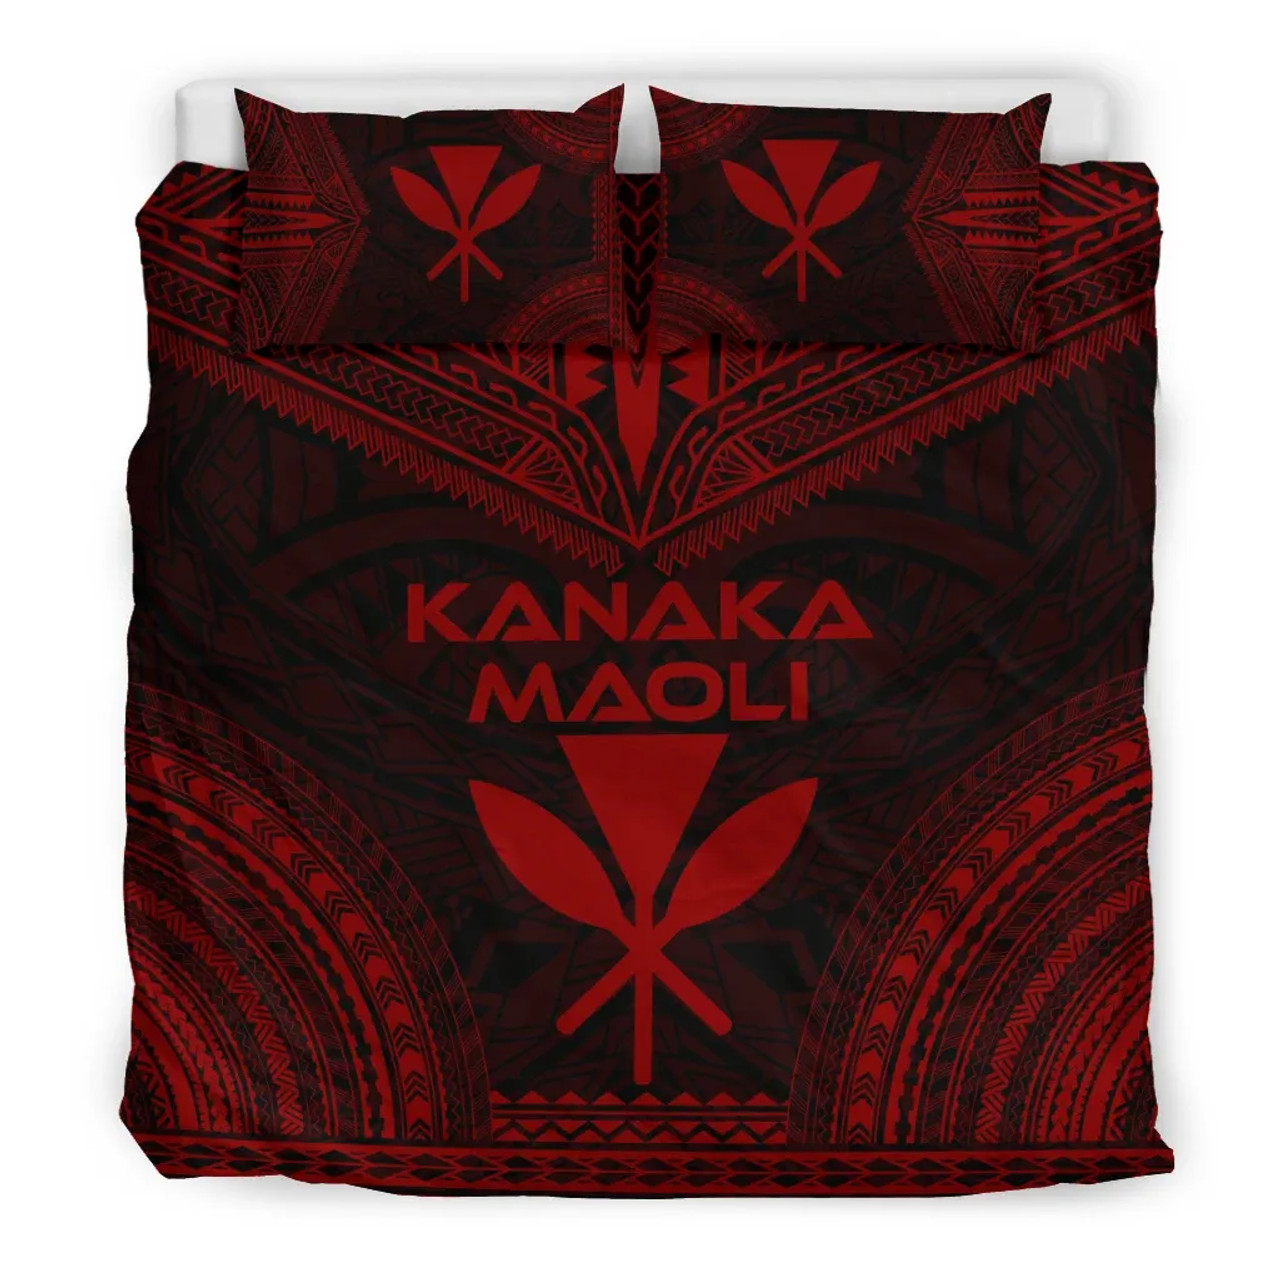 Kanaka Maoli Polynesian Chief Duvet Cover Set - Red Version 3